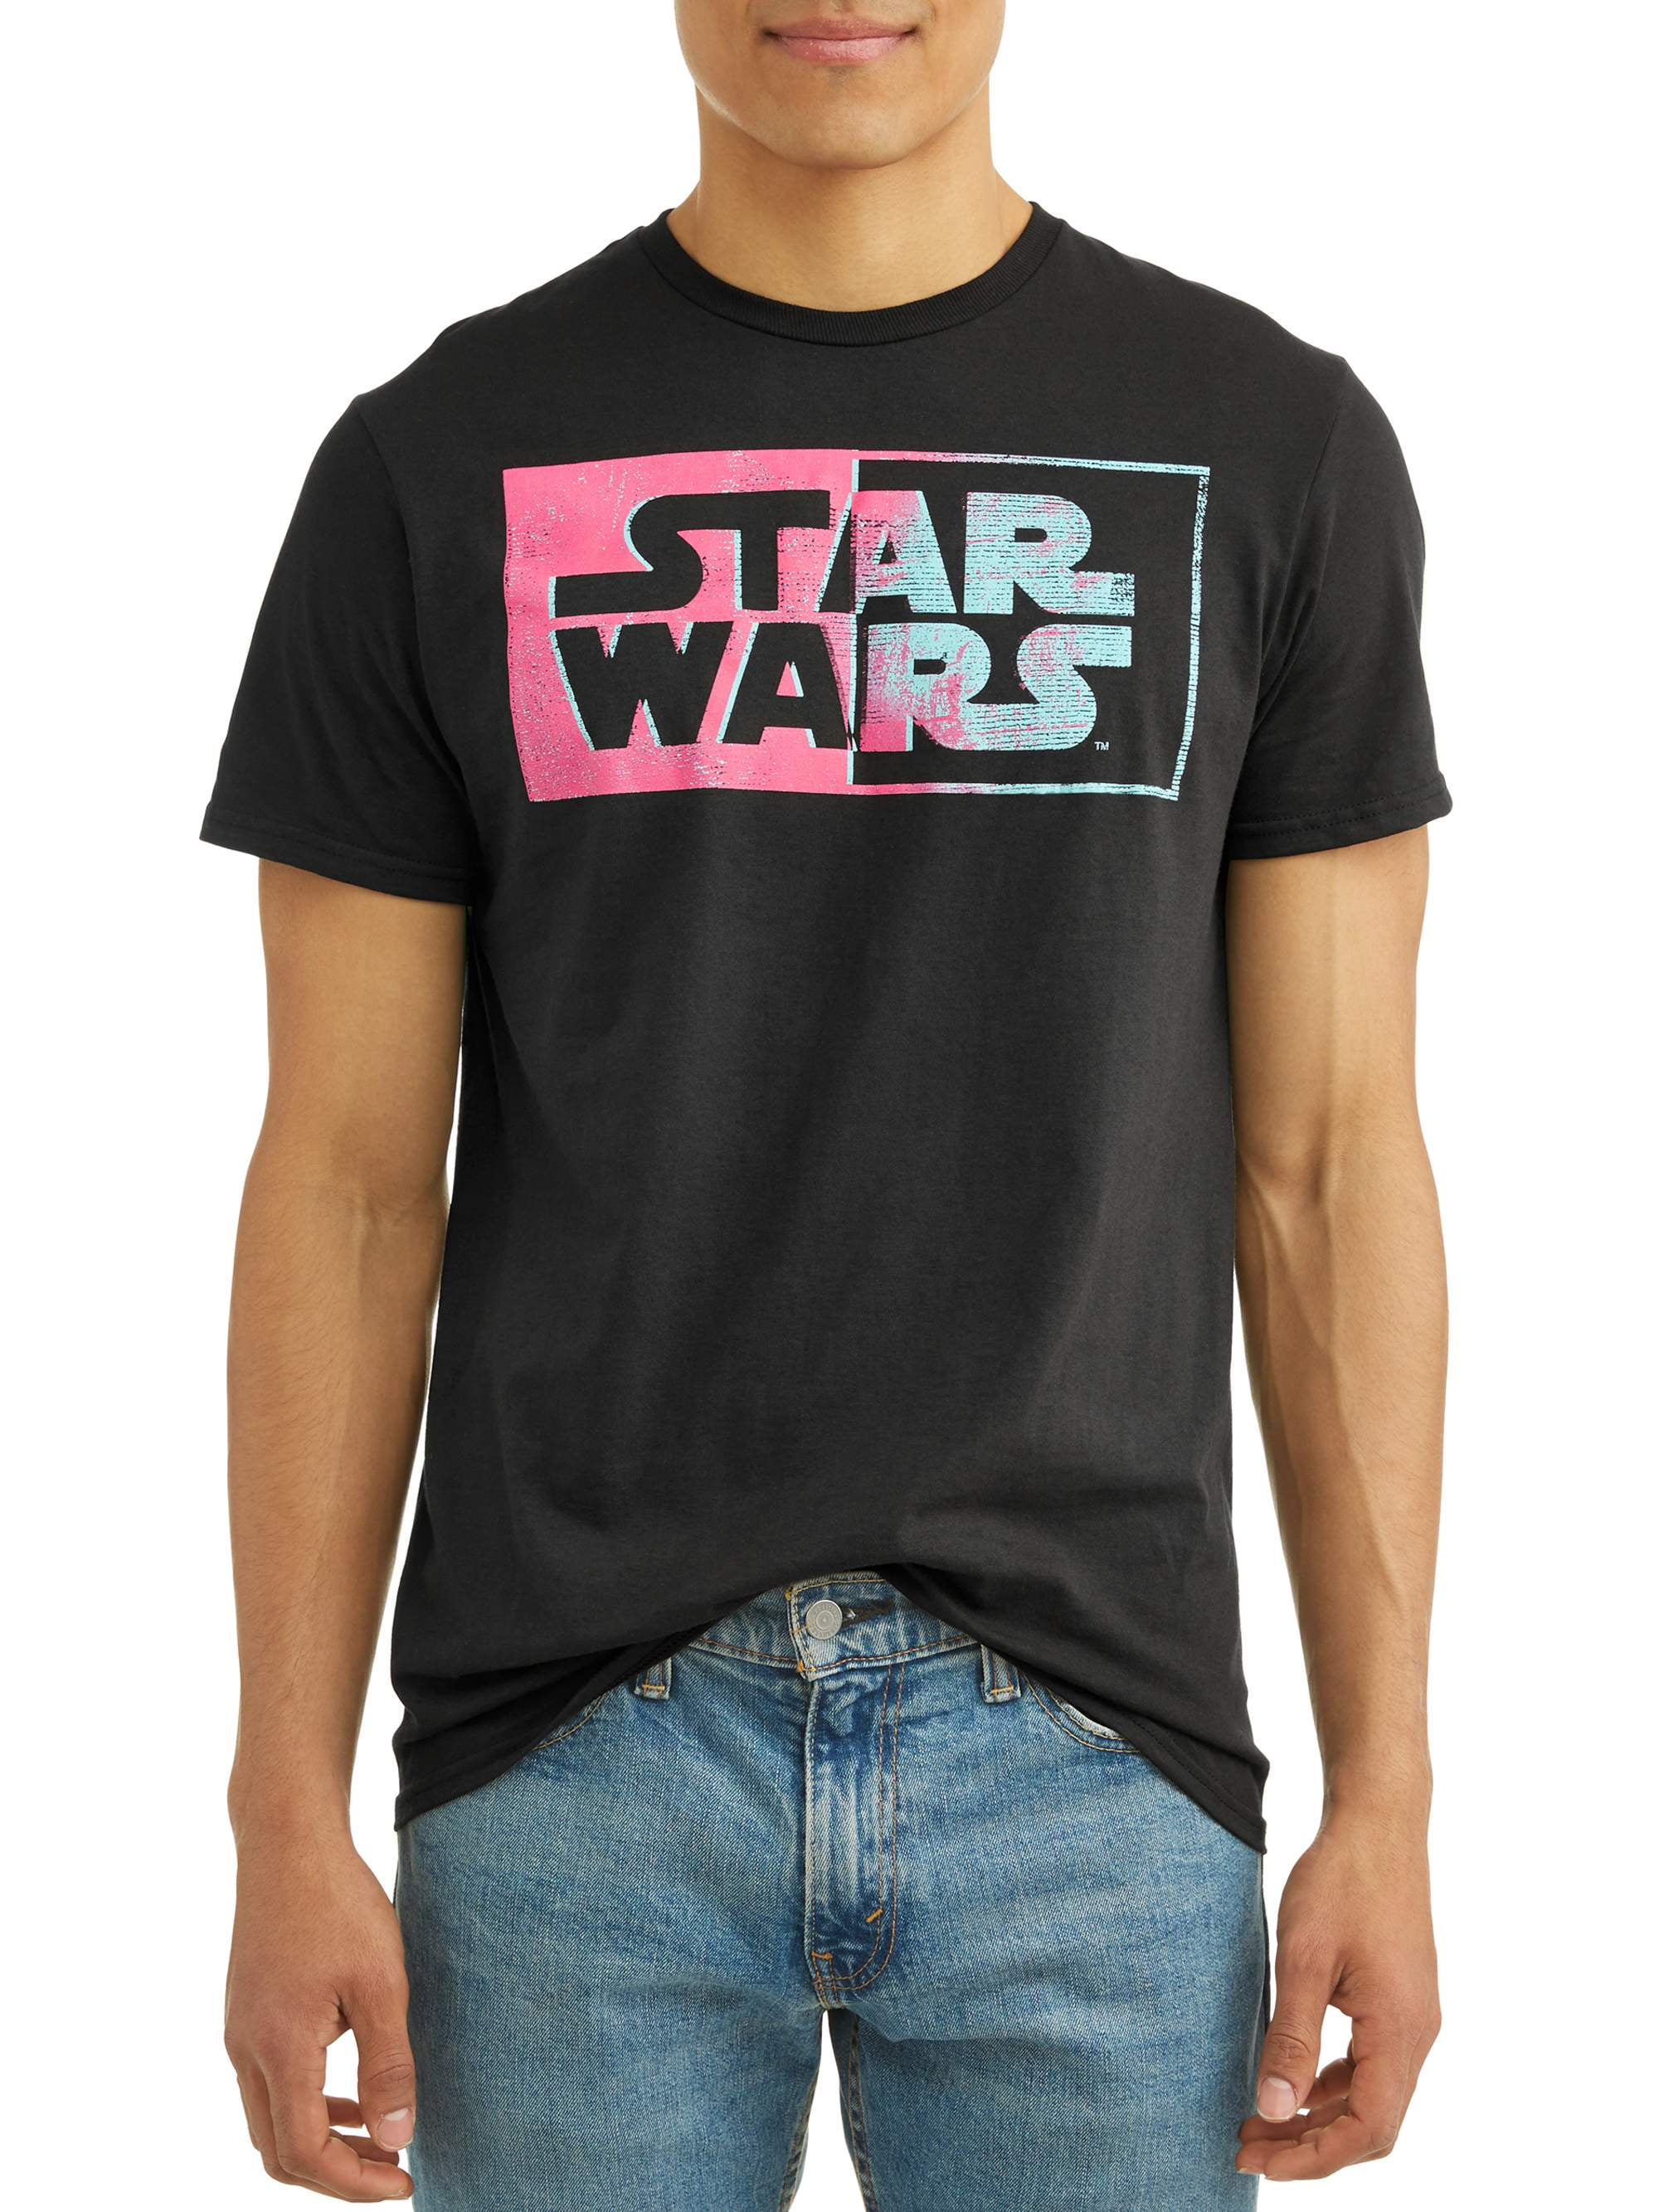 next star wars t shirt